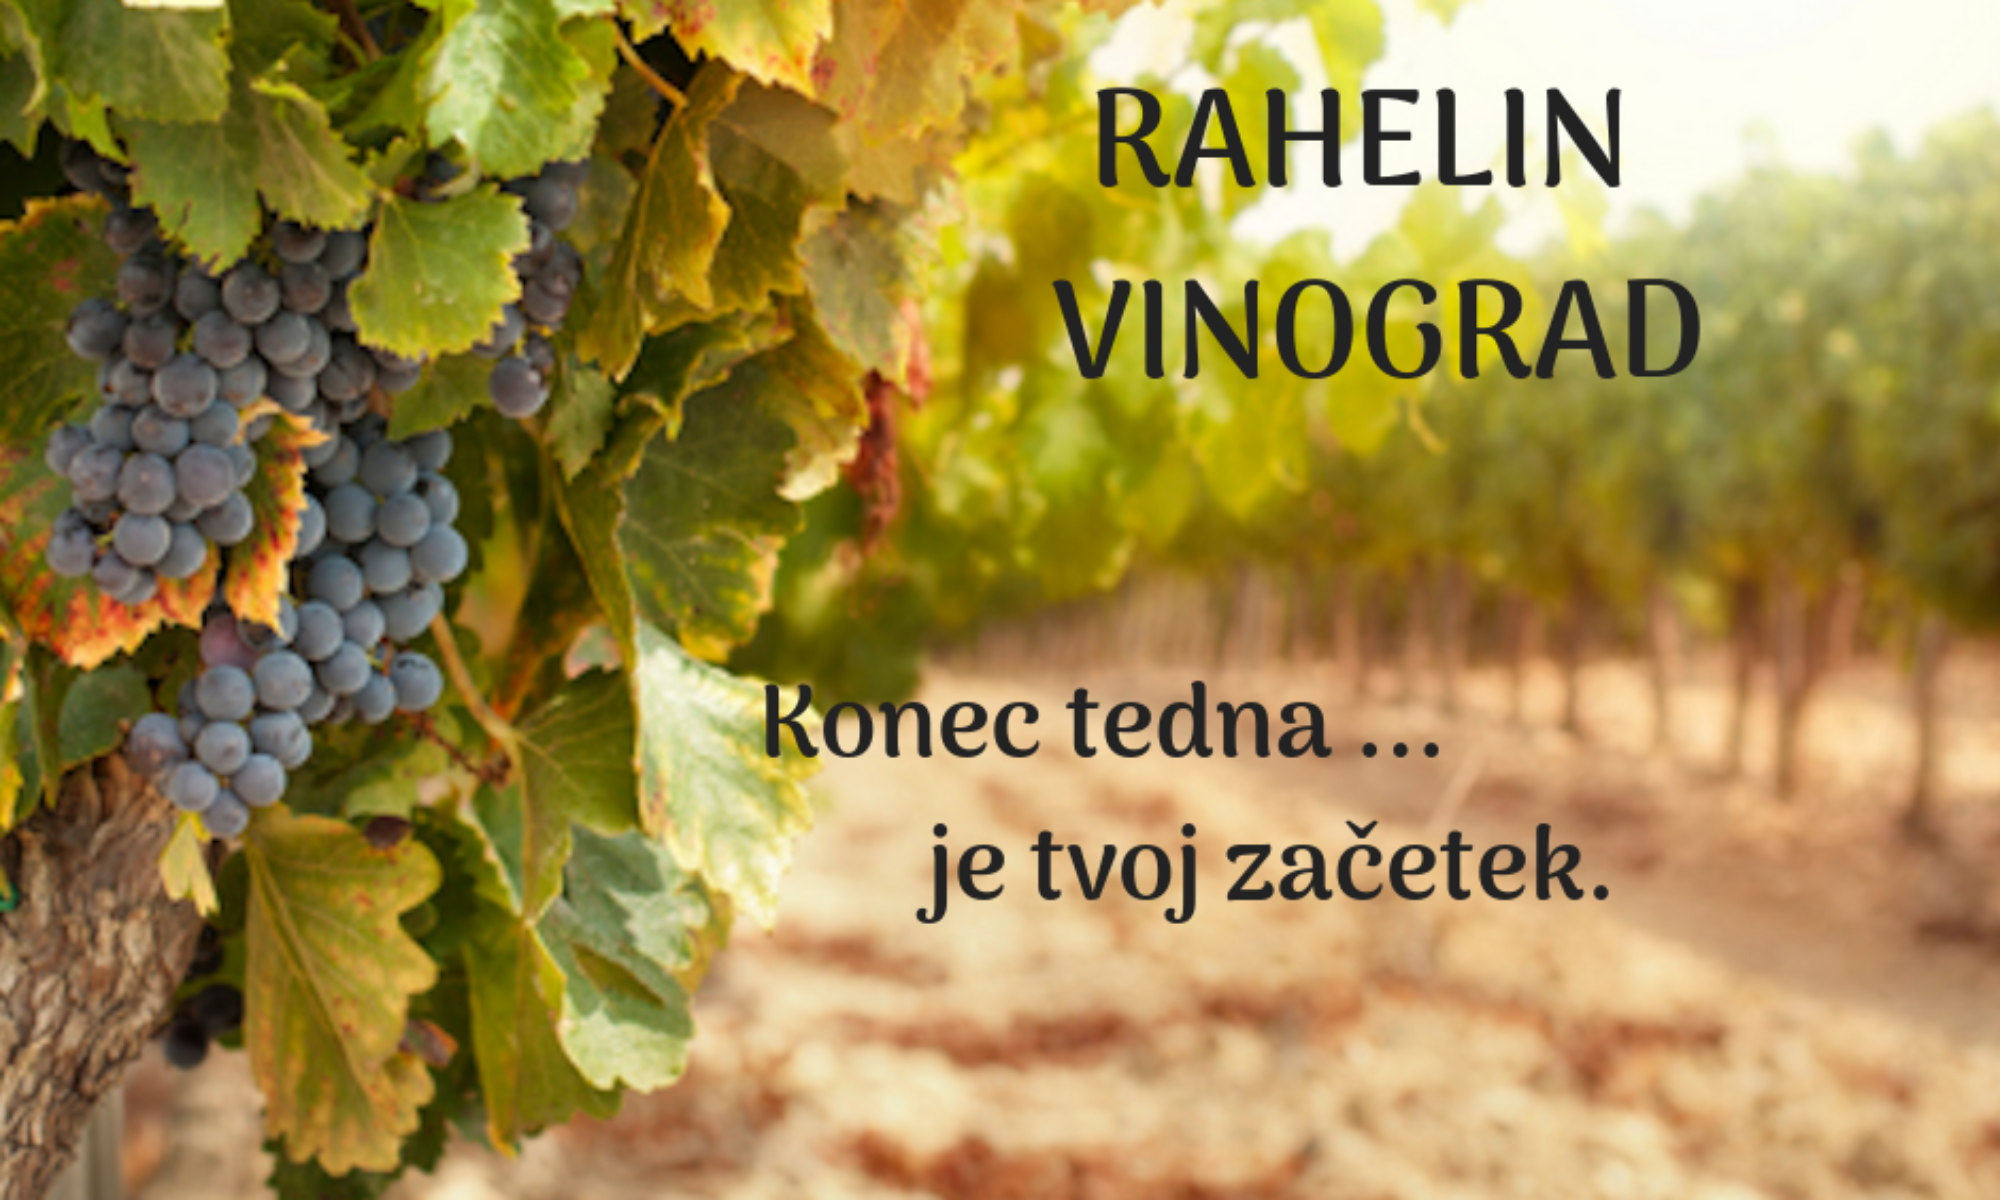 Rahelin vinograd